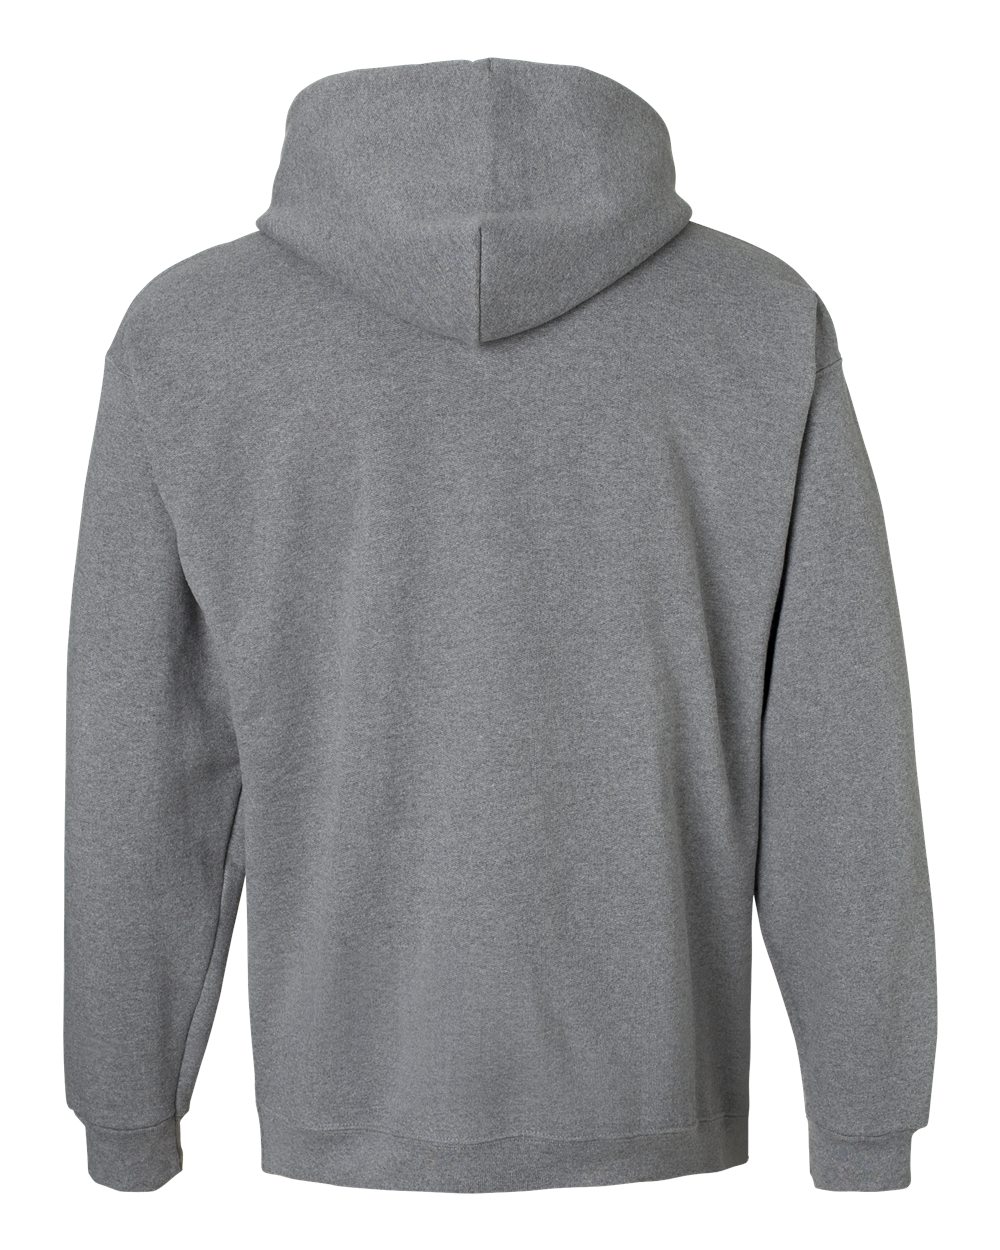 Hanes Mens Blank Ultimate Cotton Hooded Sweatshirt F170 up to 3XL | eBay